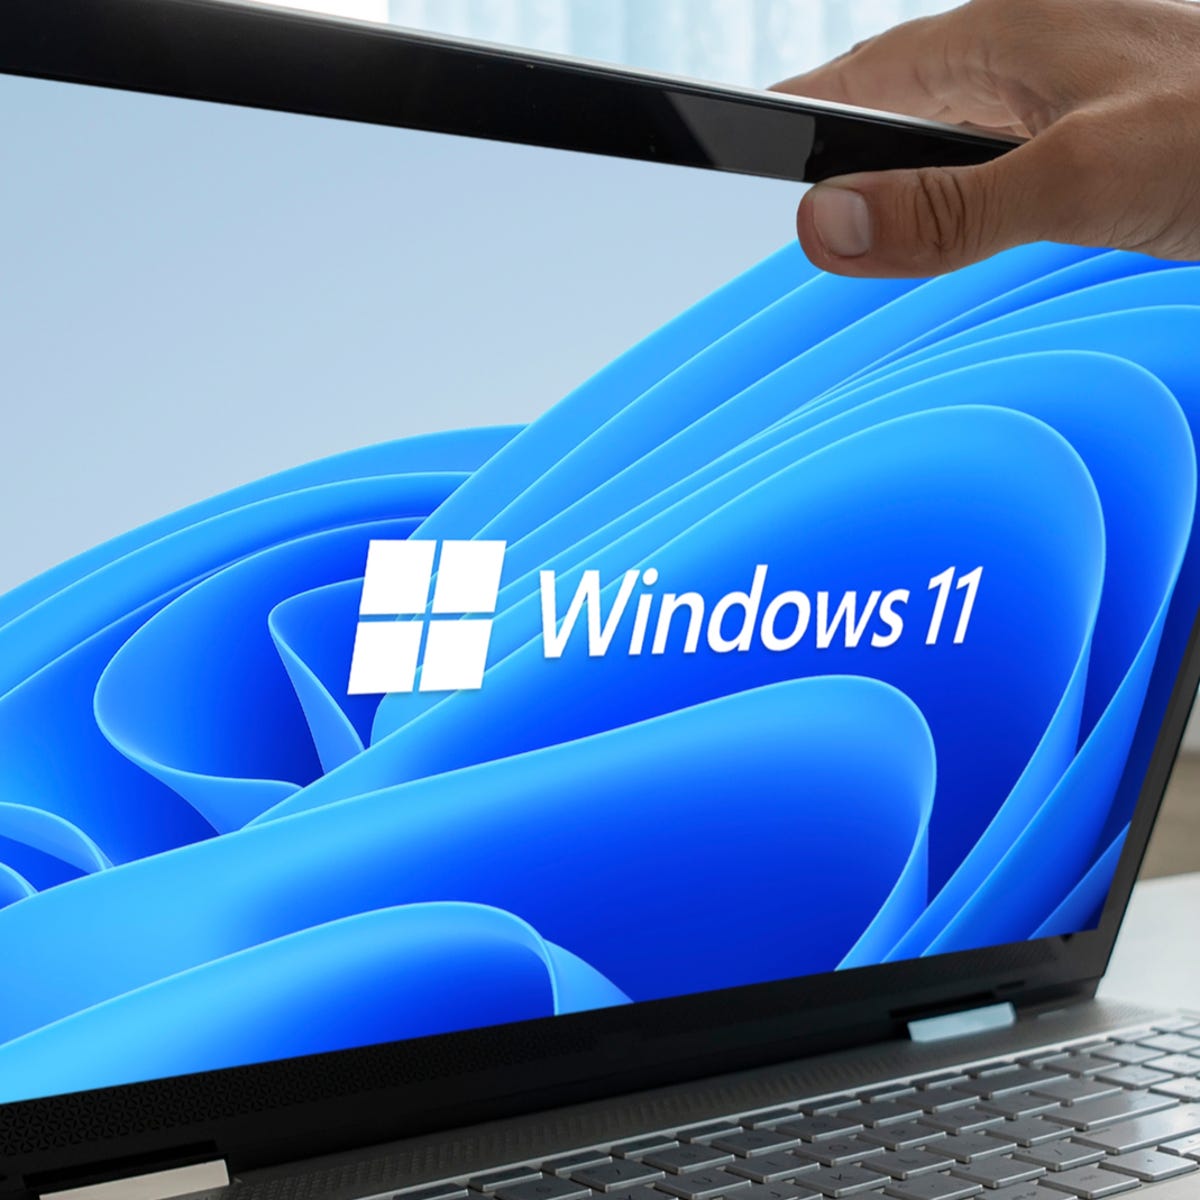 Windows 11 Pro Installation Physical USB Drive